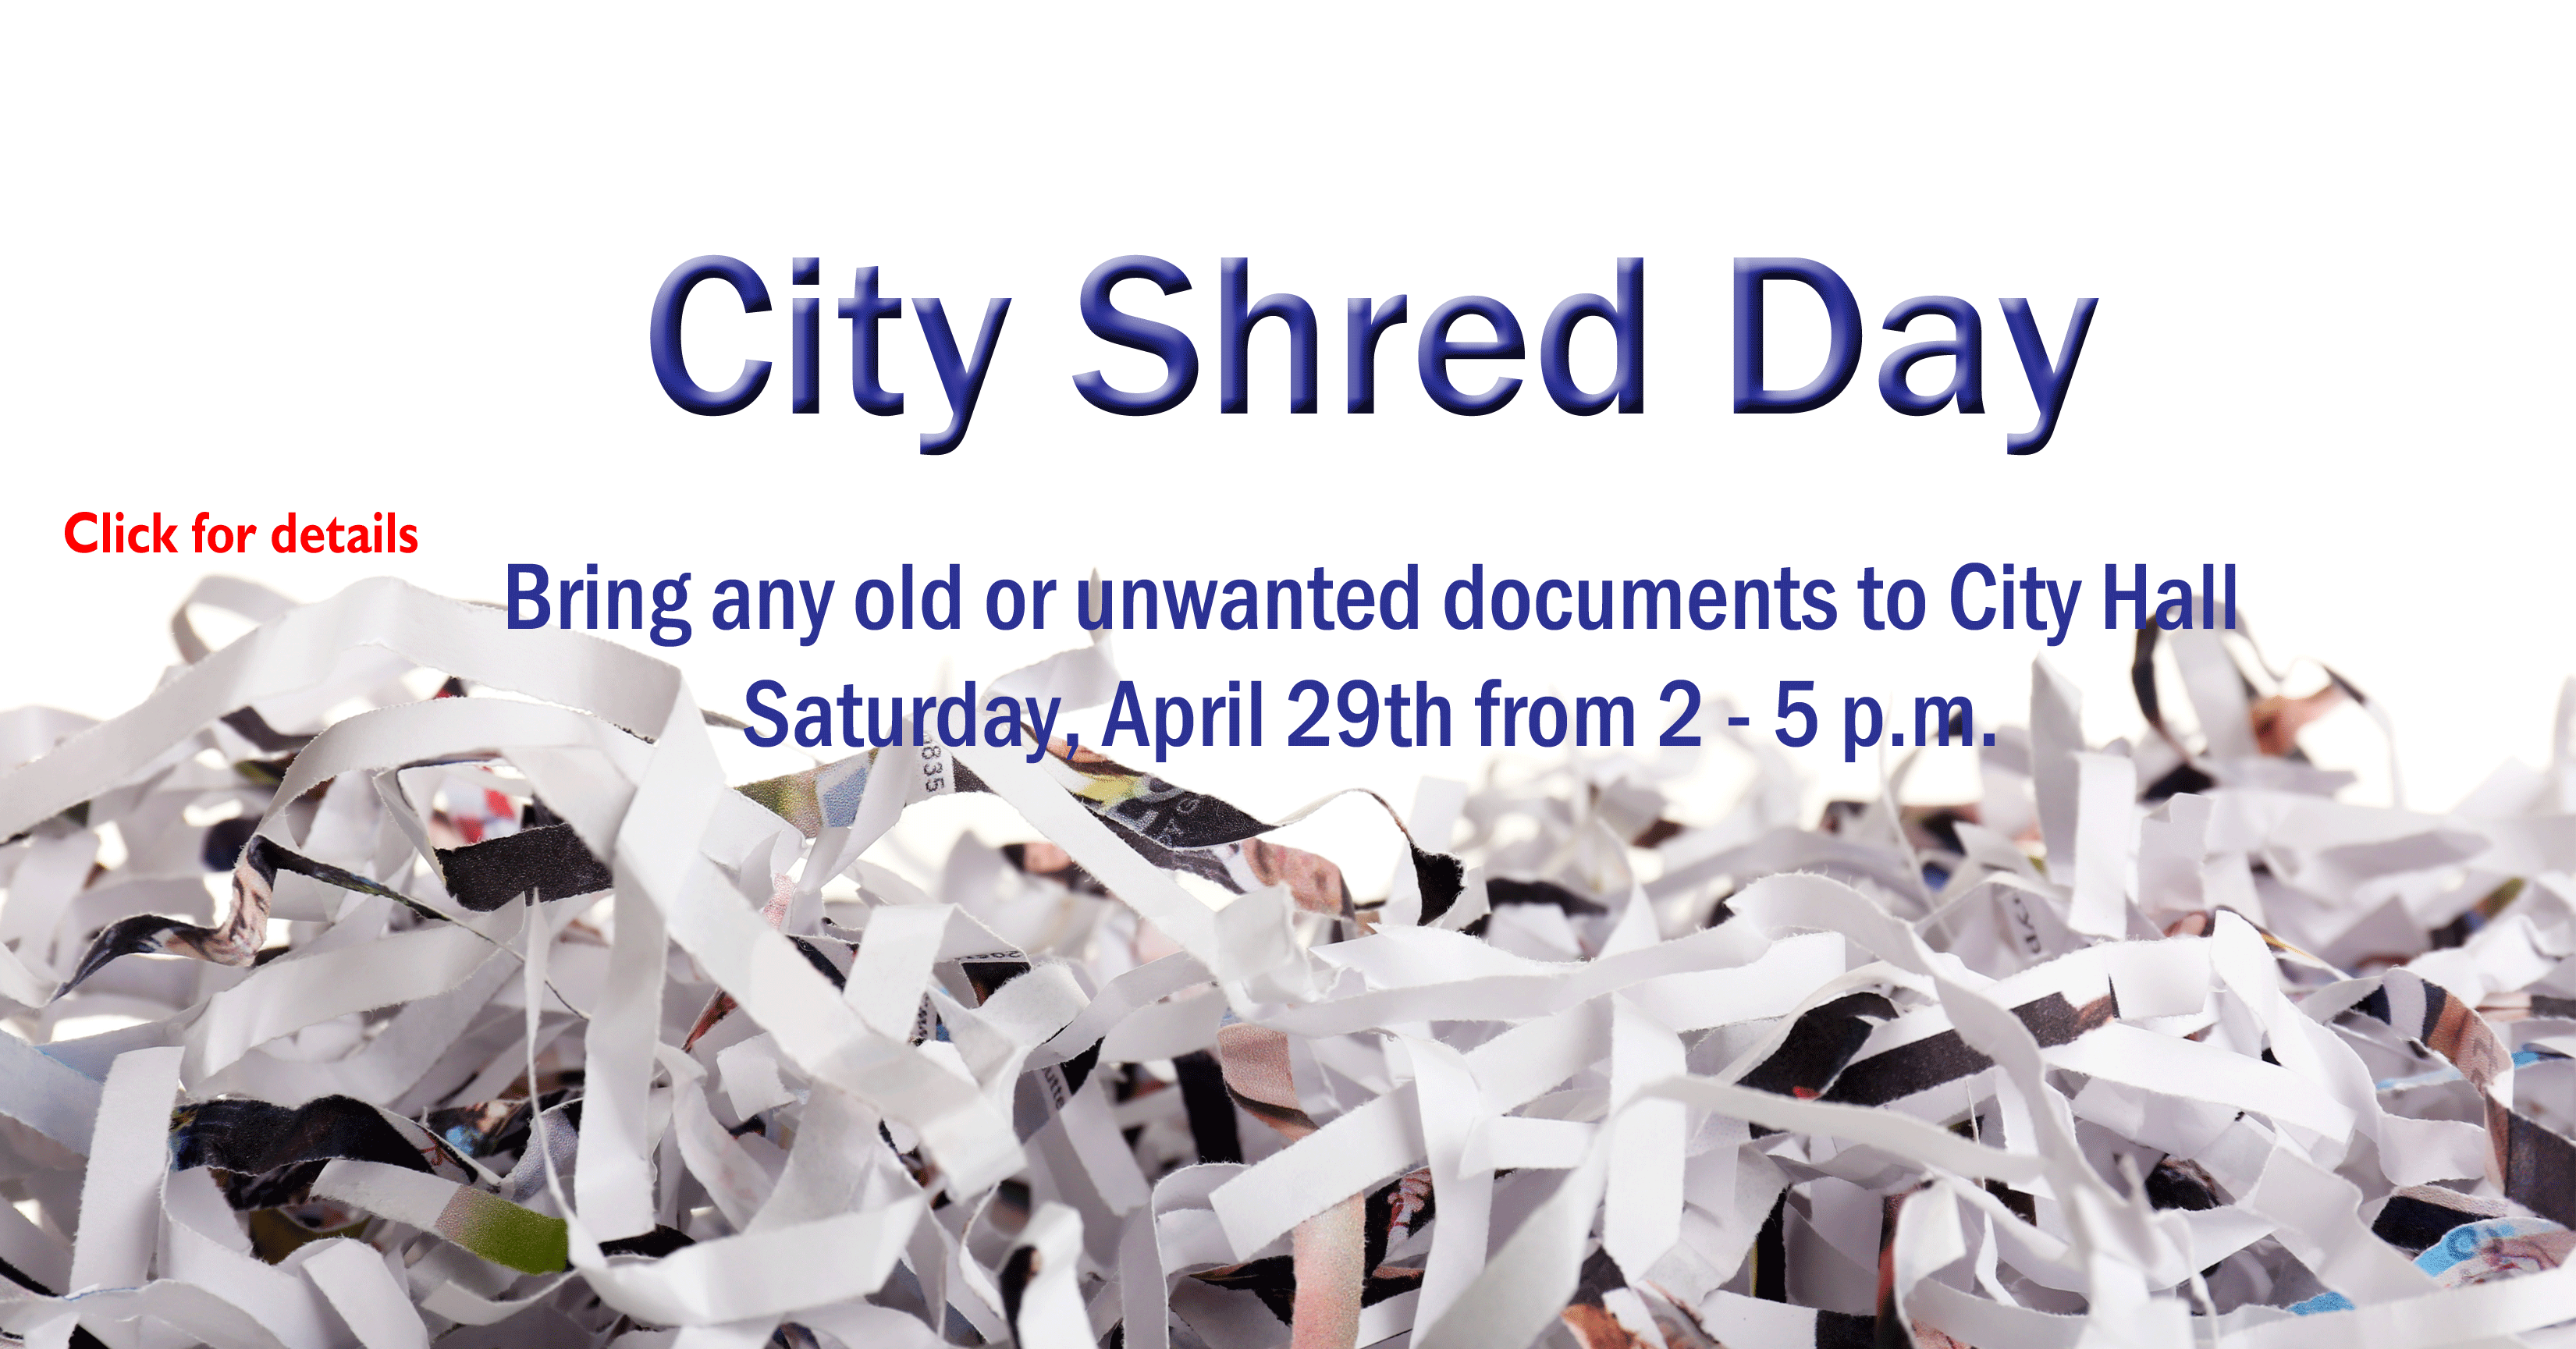 City Shred Day News